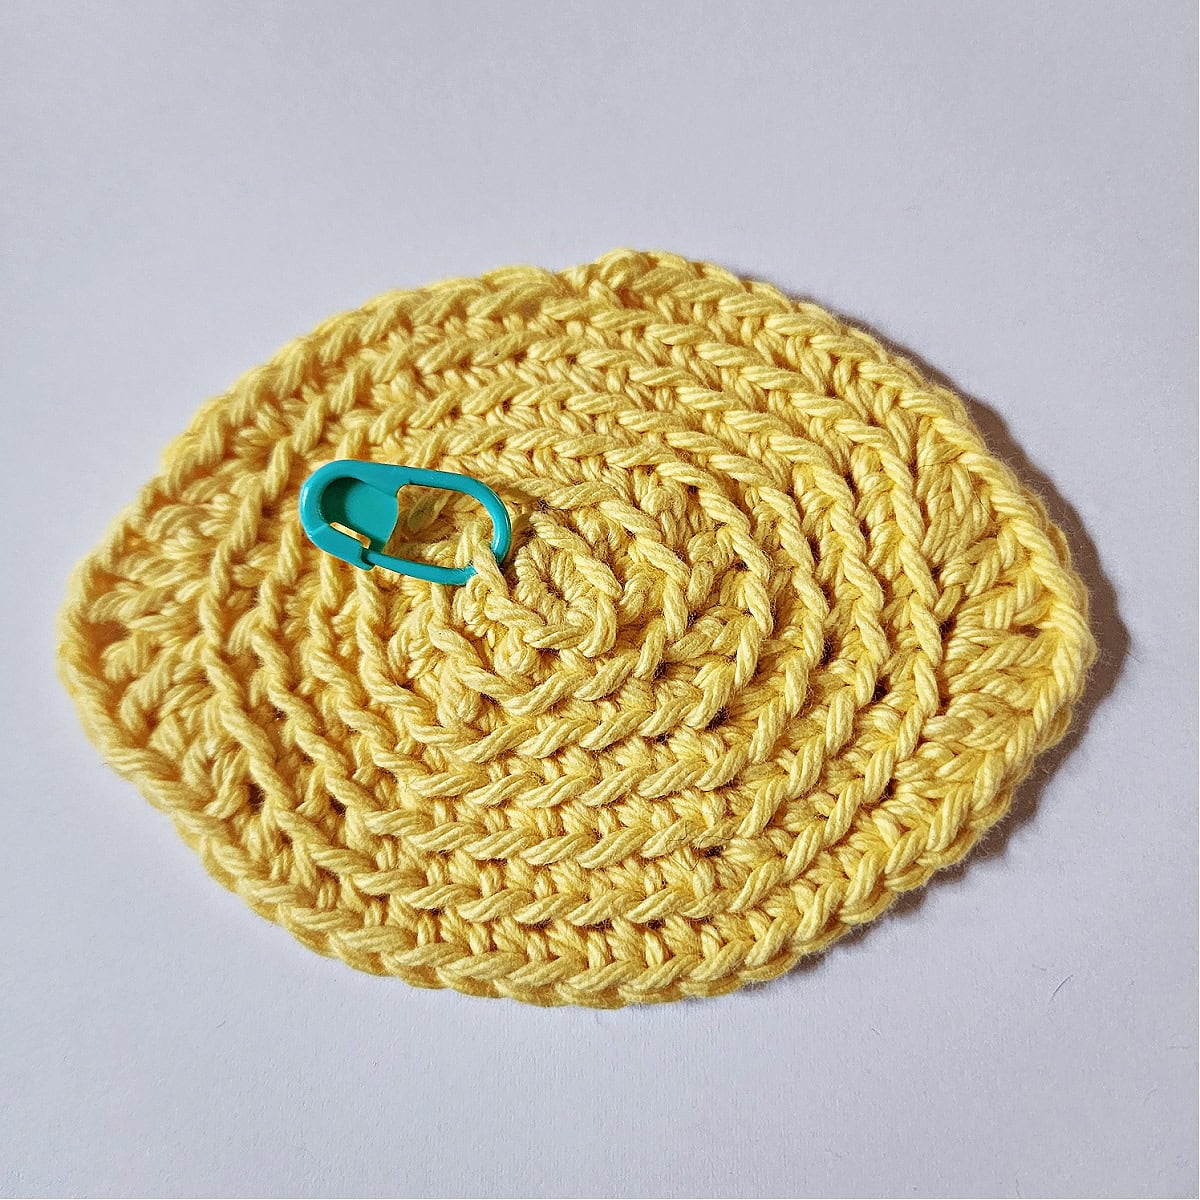 Crochet lemon with a blue stitch marker to mark the center.